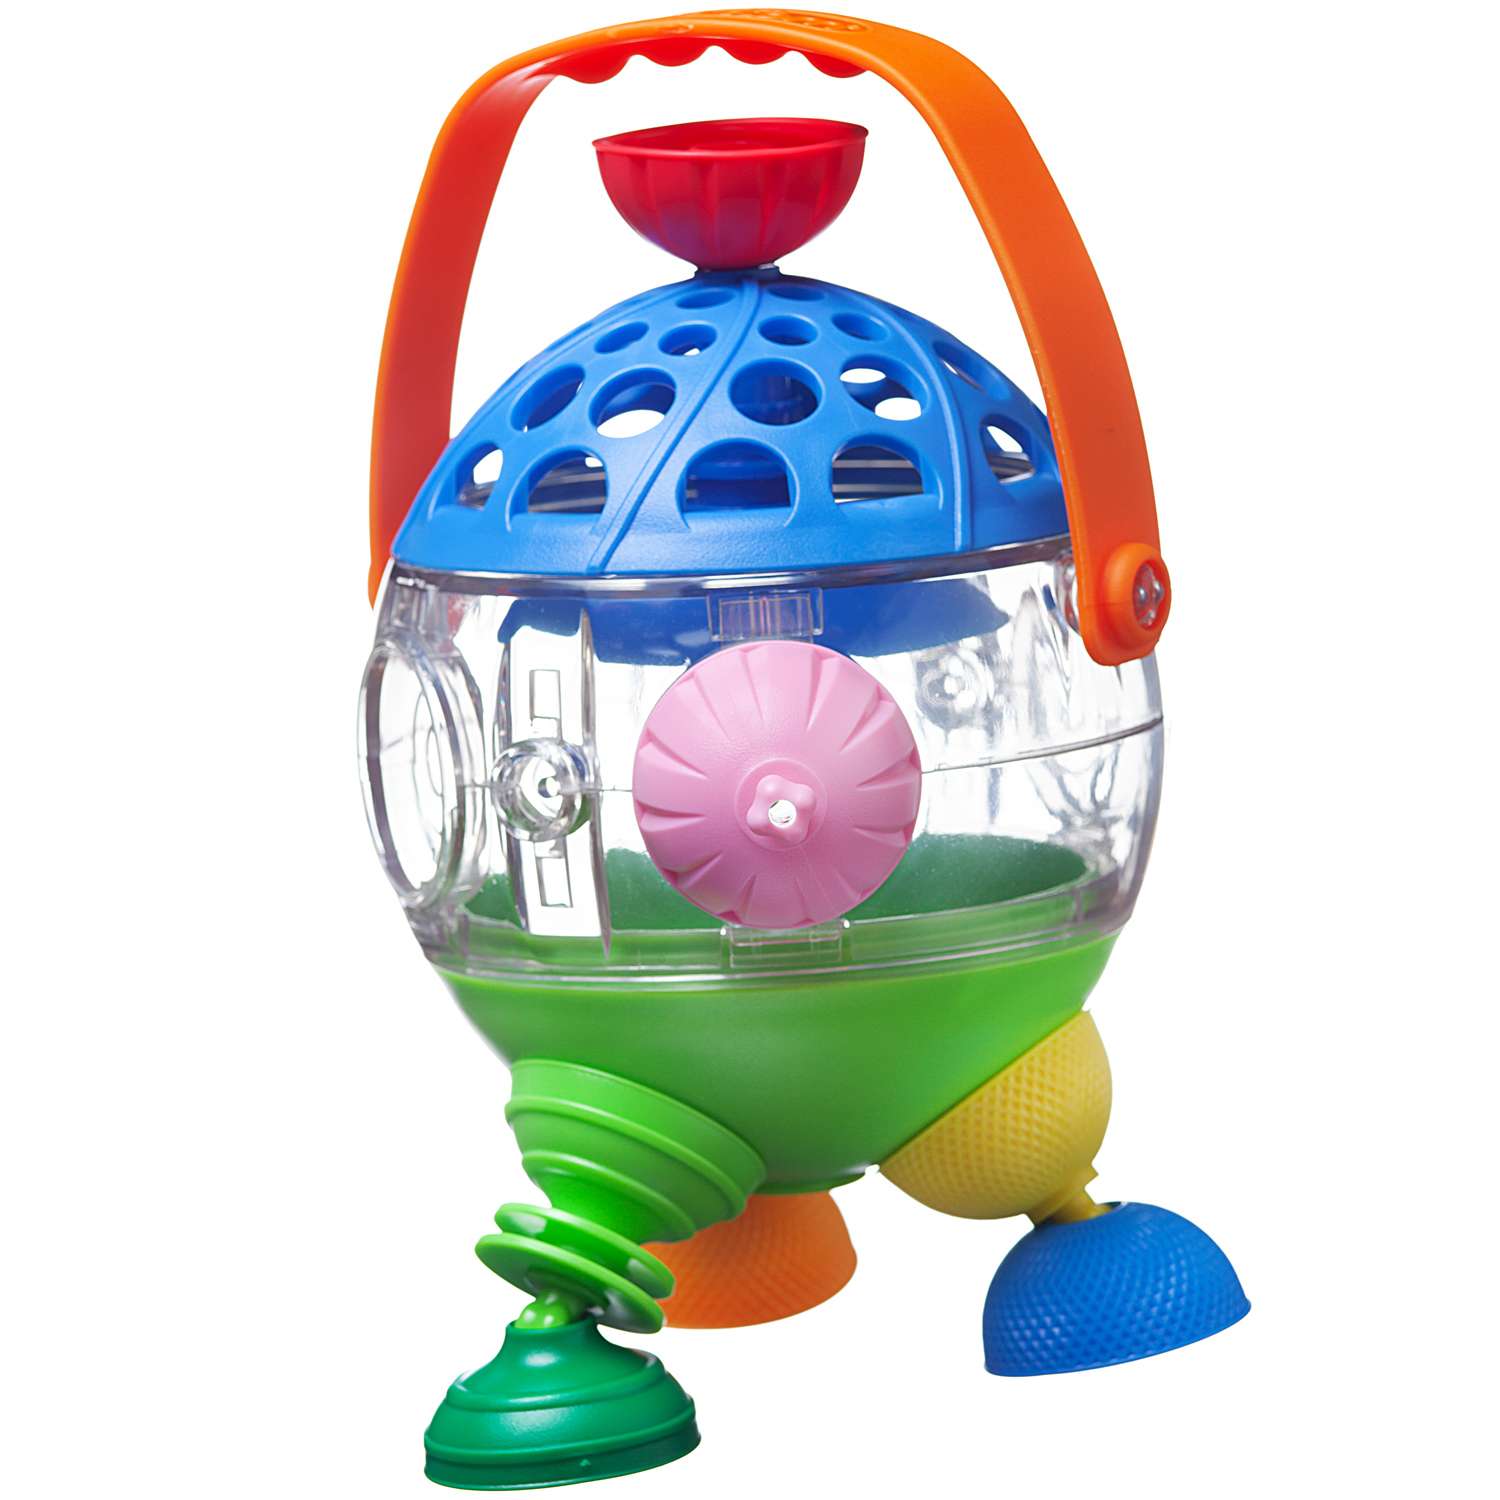 Развивающая игрушка LALABOOM Ведерко для купания 12 предметов - фото 1